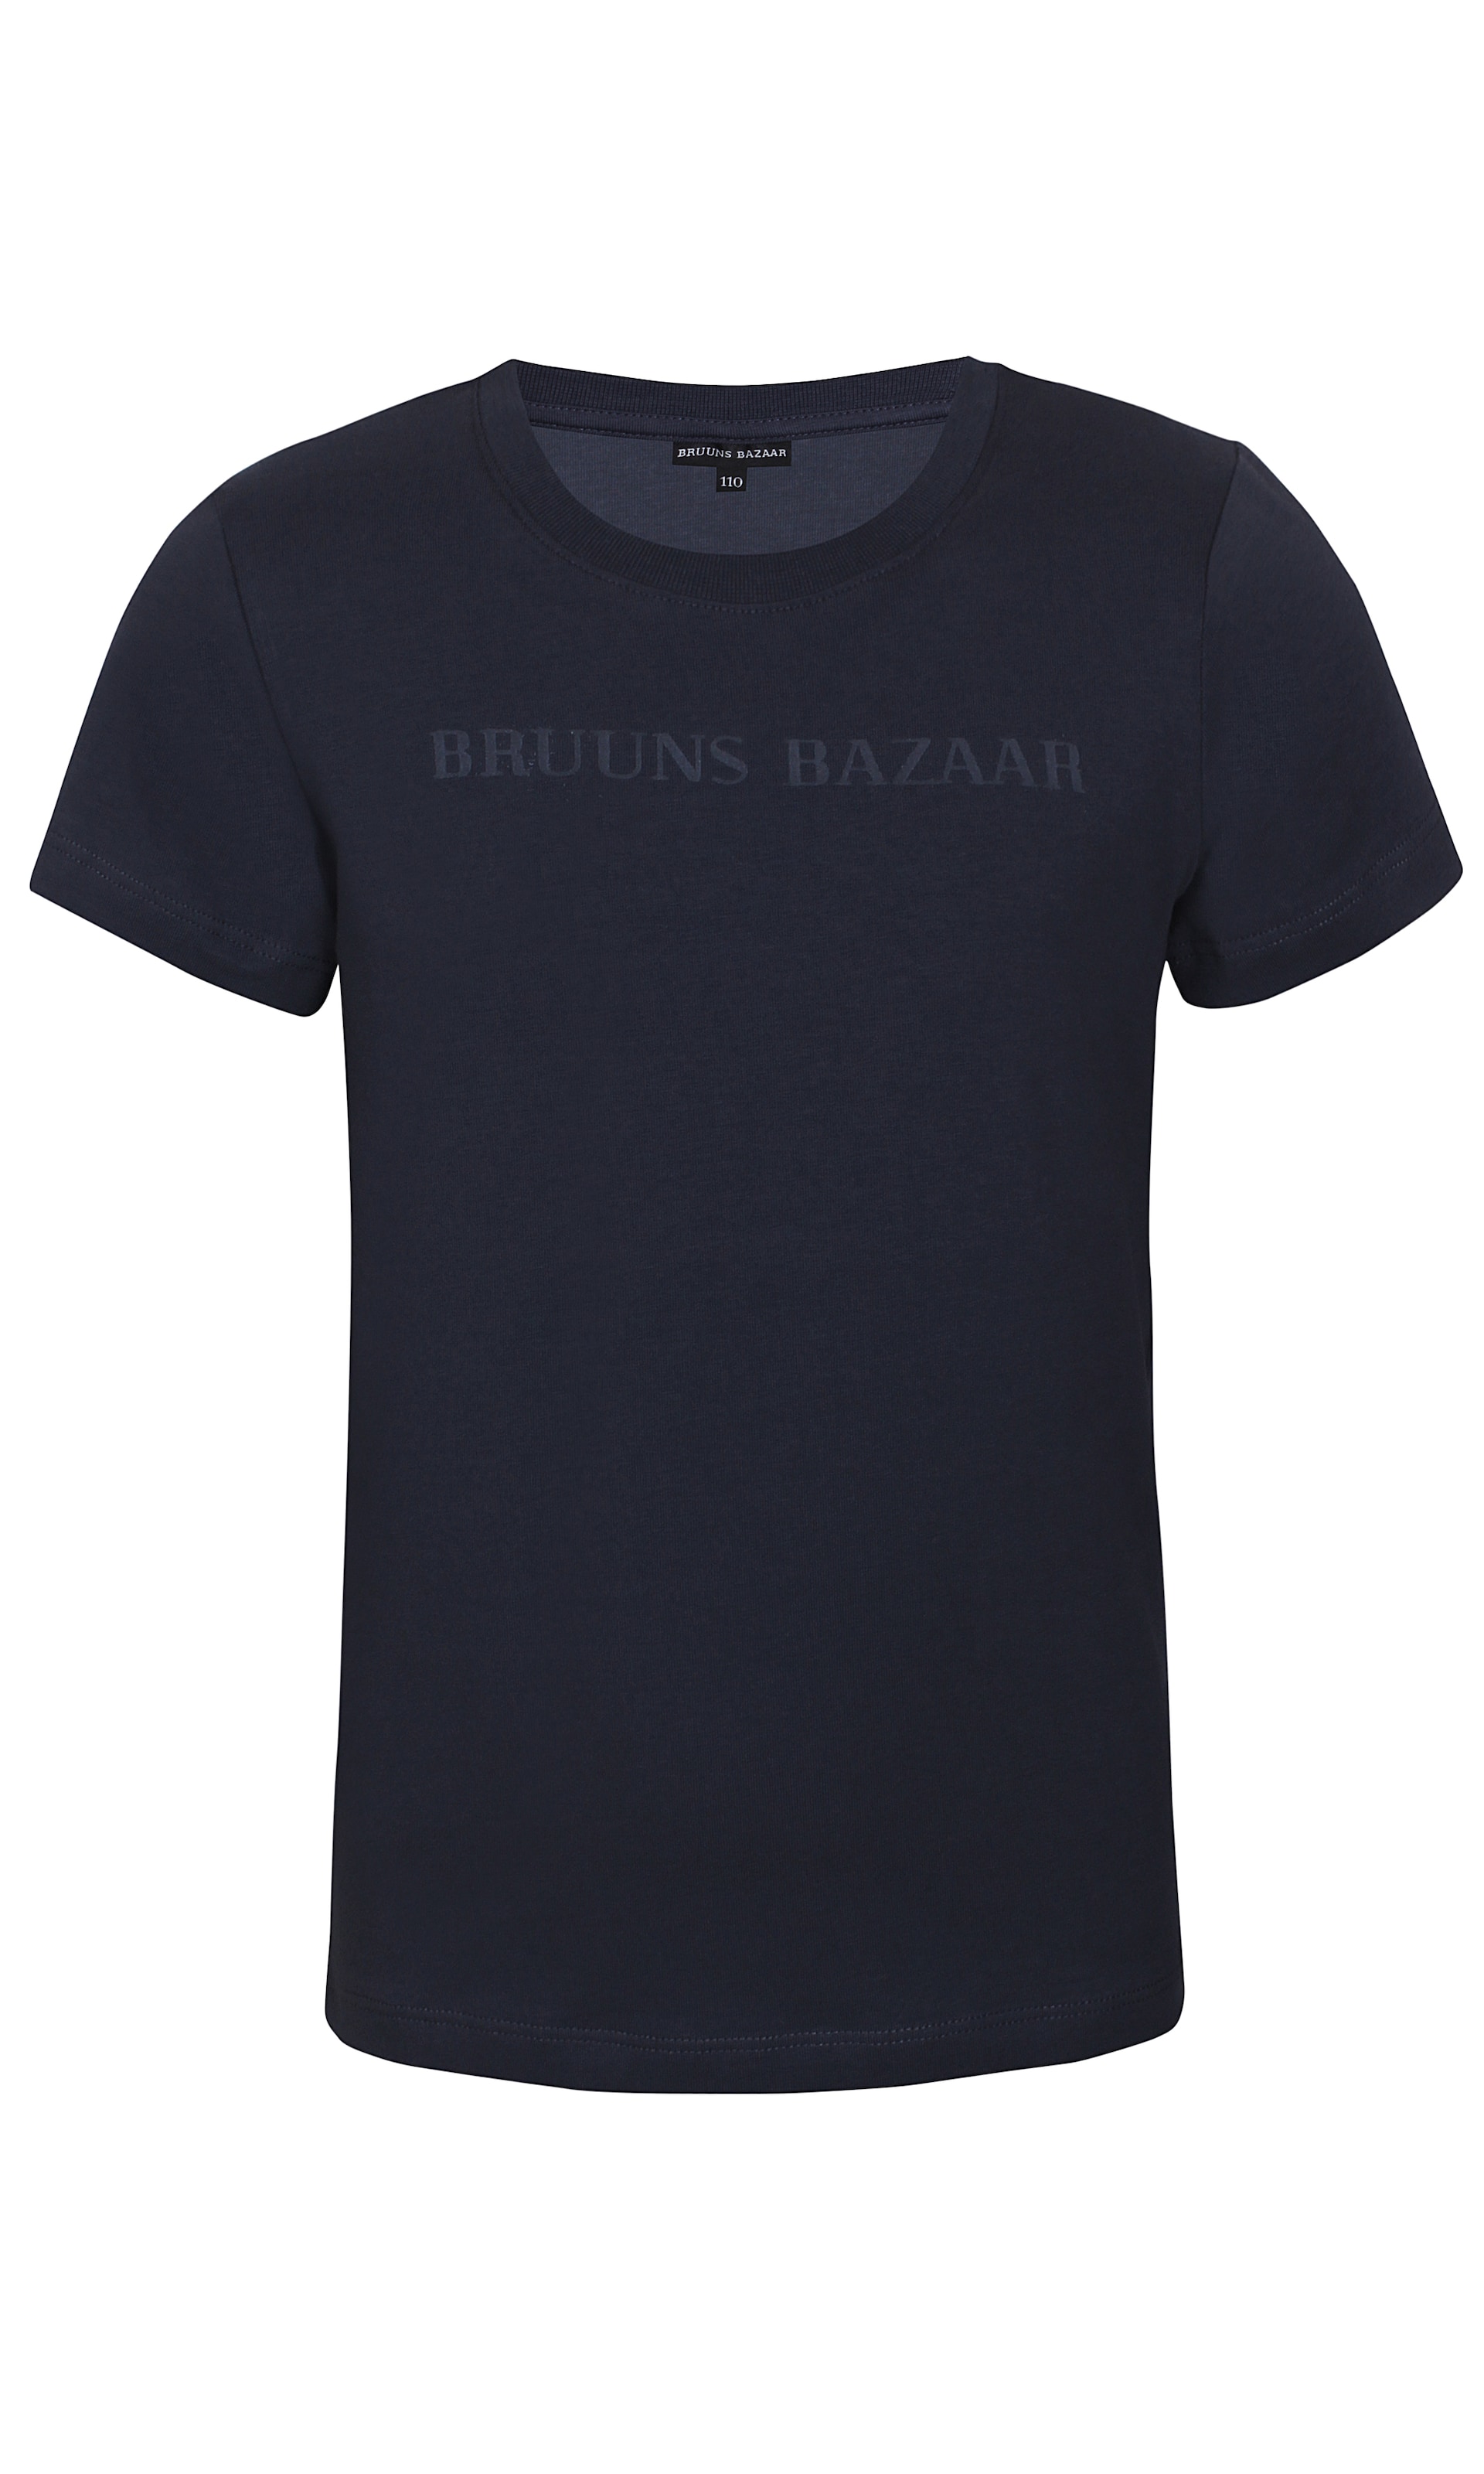 Enfants 92-140 T-Shirt Hans Otto Bruuns Bazaar Kids en Marine, Bleu-Gris 